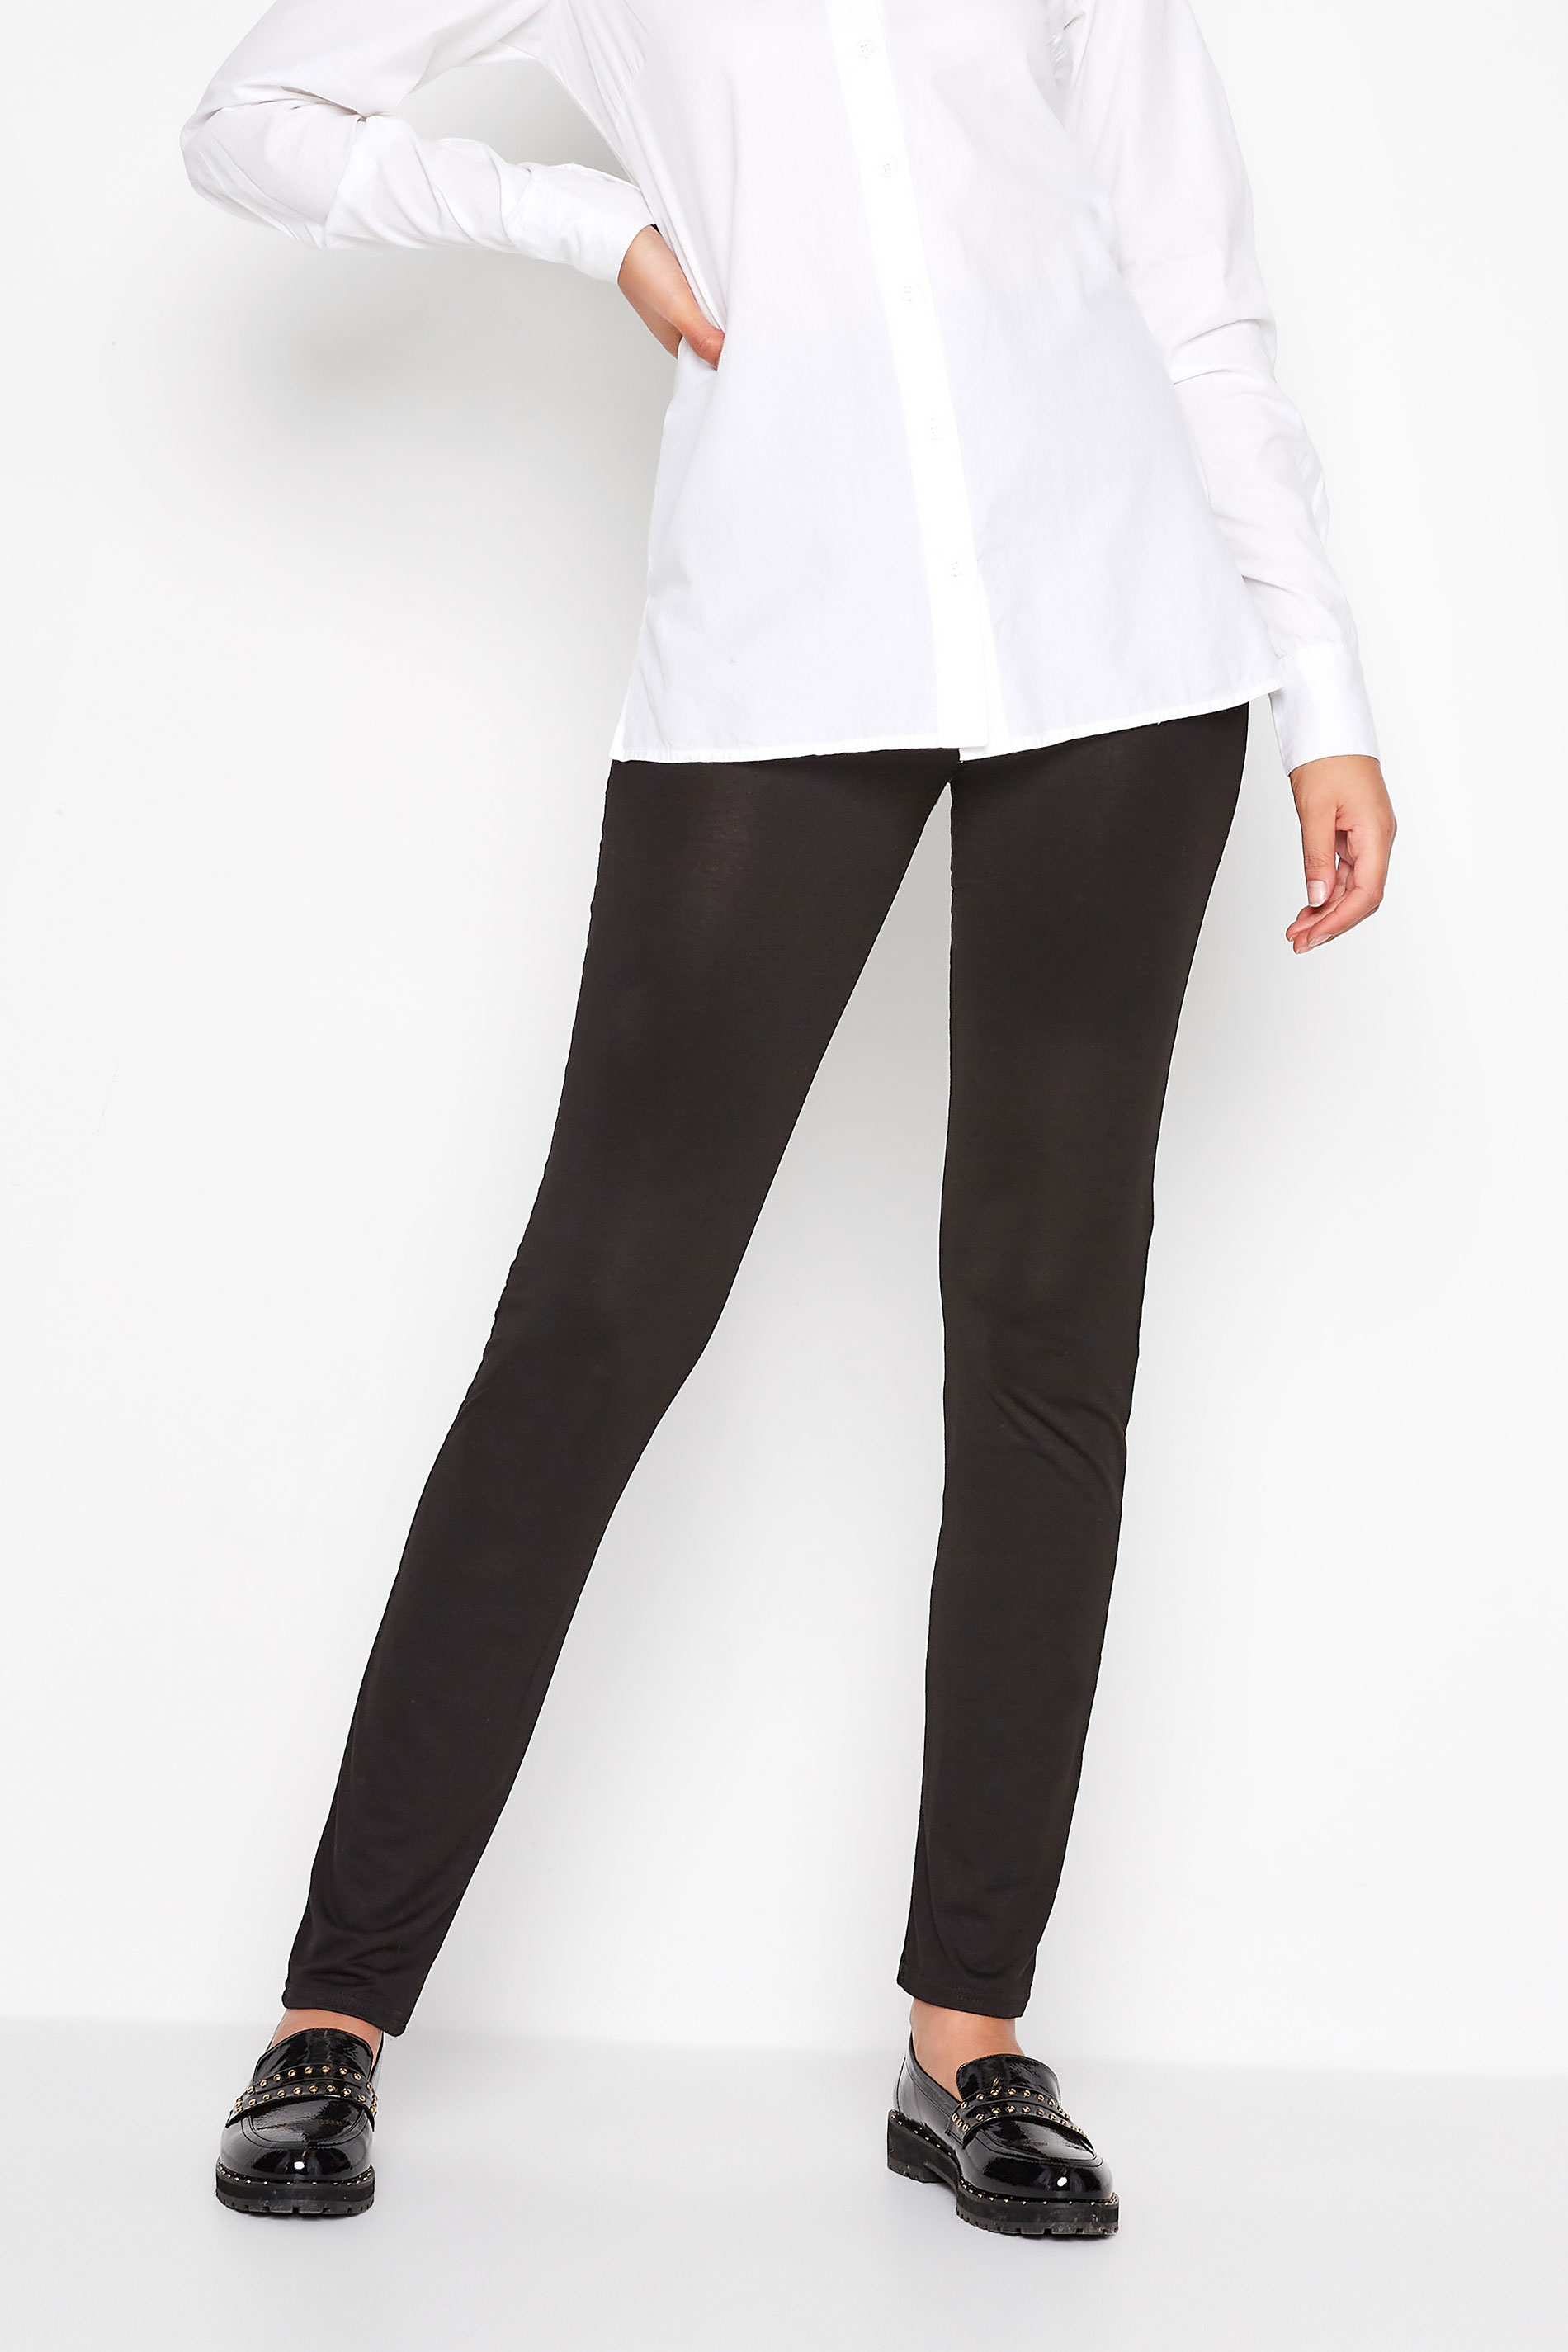 LTS Tall Women's Black Stretch Slim Leg Trousers | Long Tall Sally  1